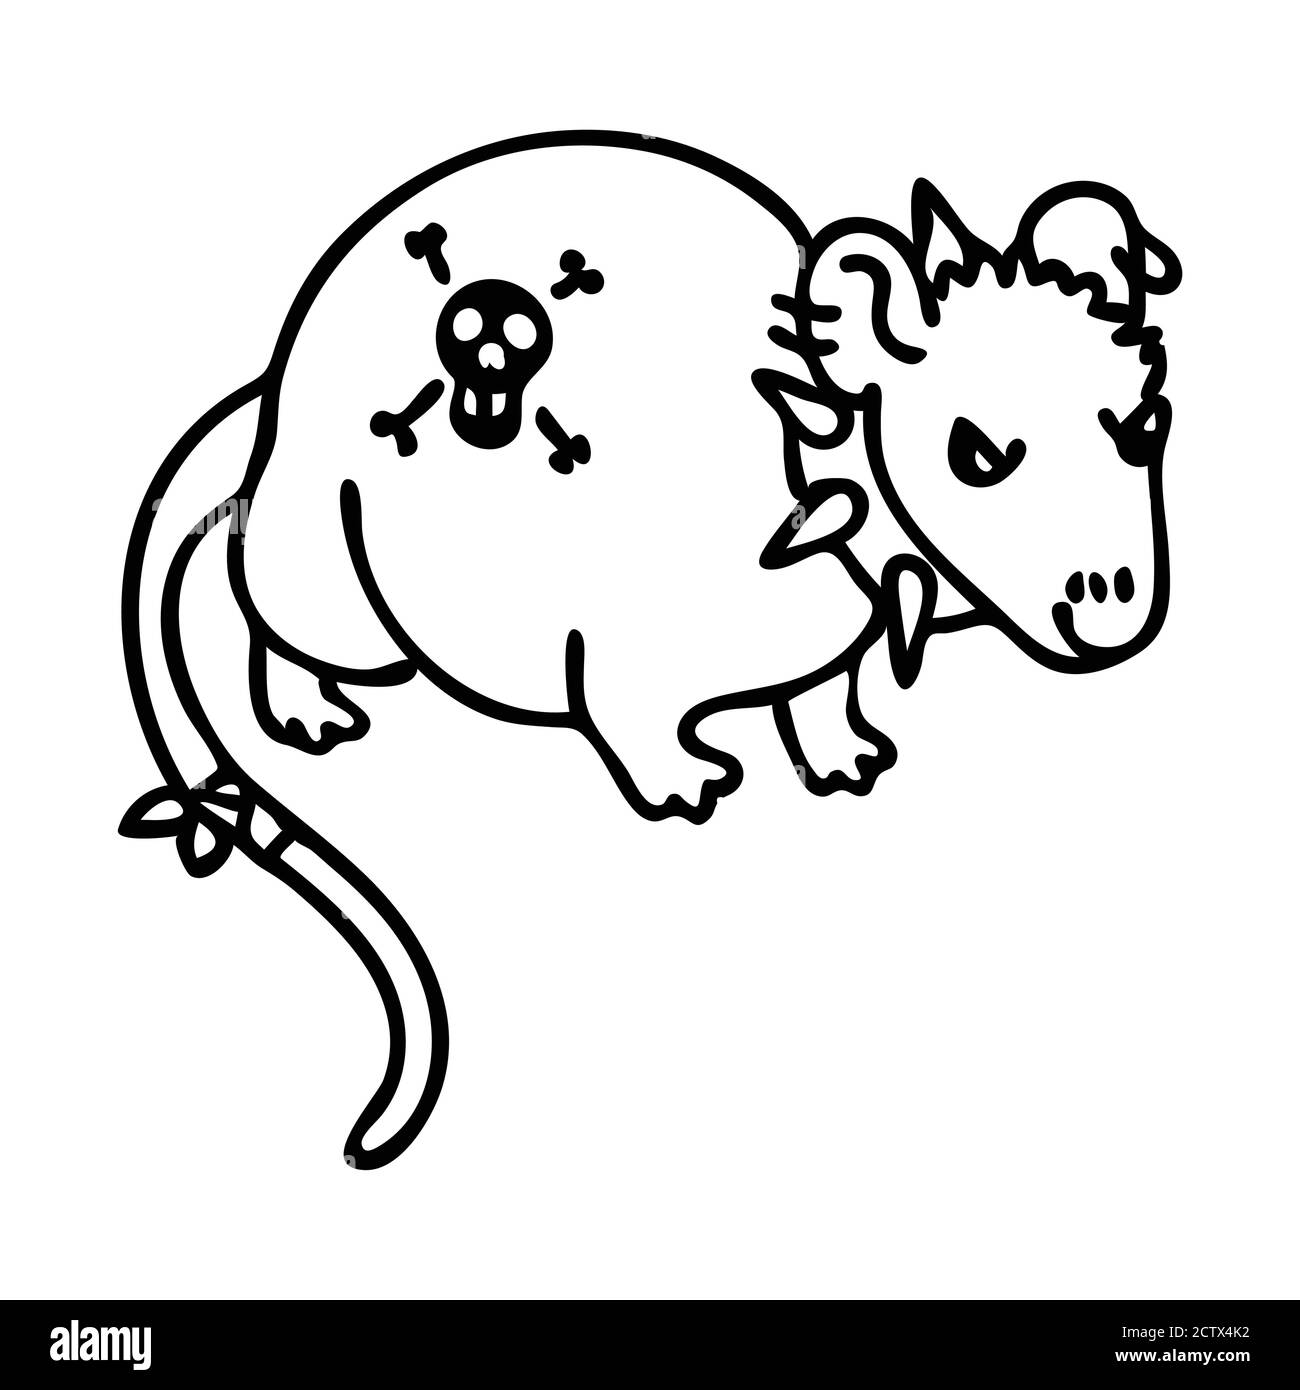 Punk rock rat with mohawk illustration clipart. Simple alternative sticker.  Kids emo rocker cute hand drawn cartoon animal motif Stock Vector Image &  Art - Alamy